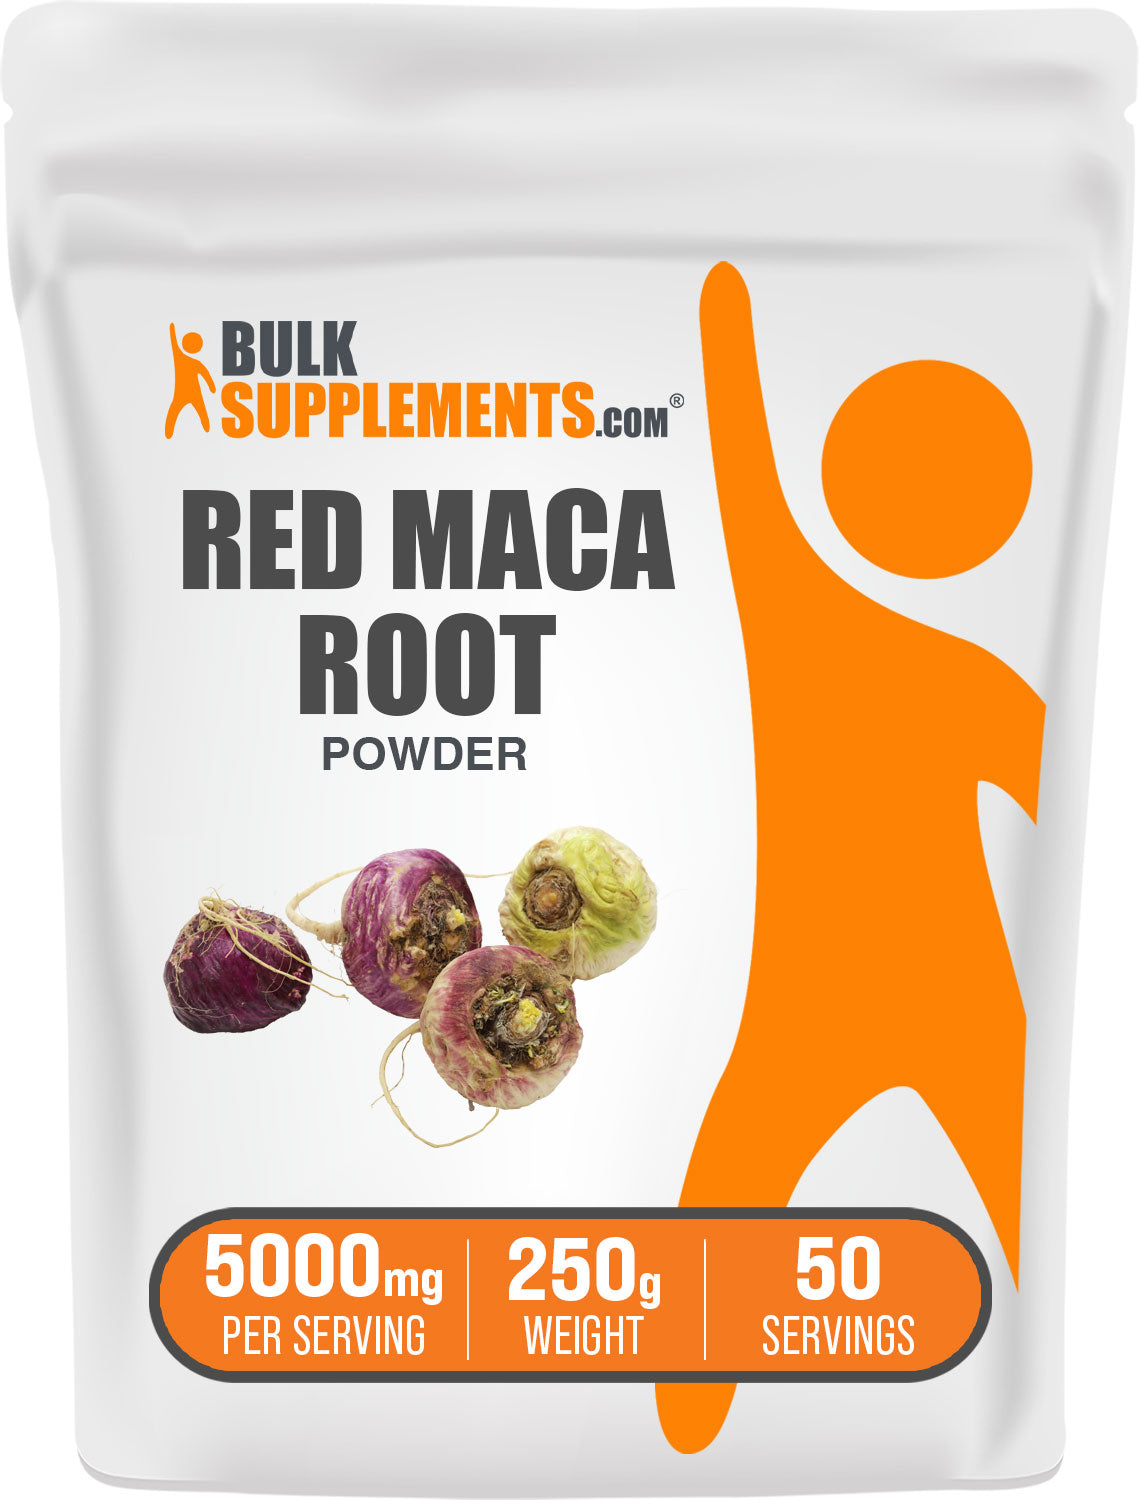 BulkSupplements.com Red Maca Powder 250g Bag